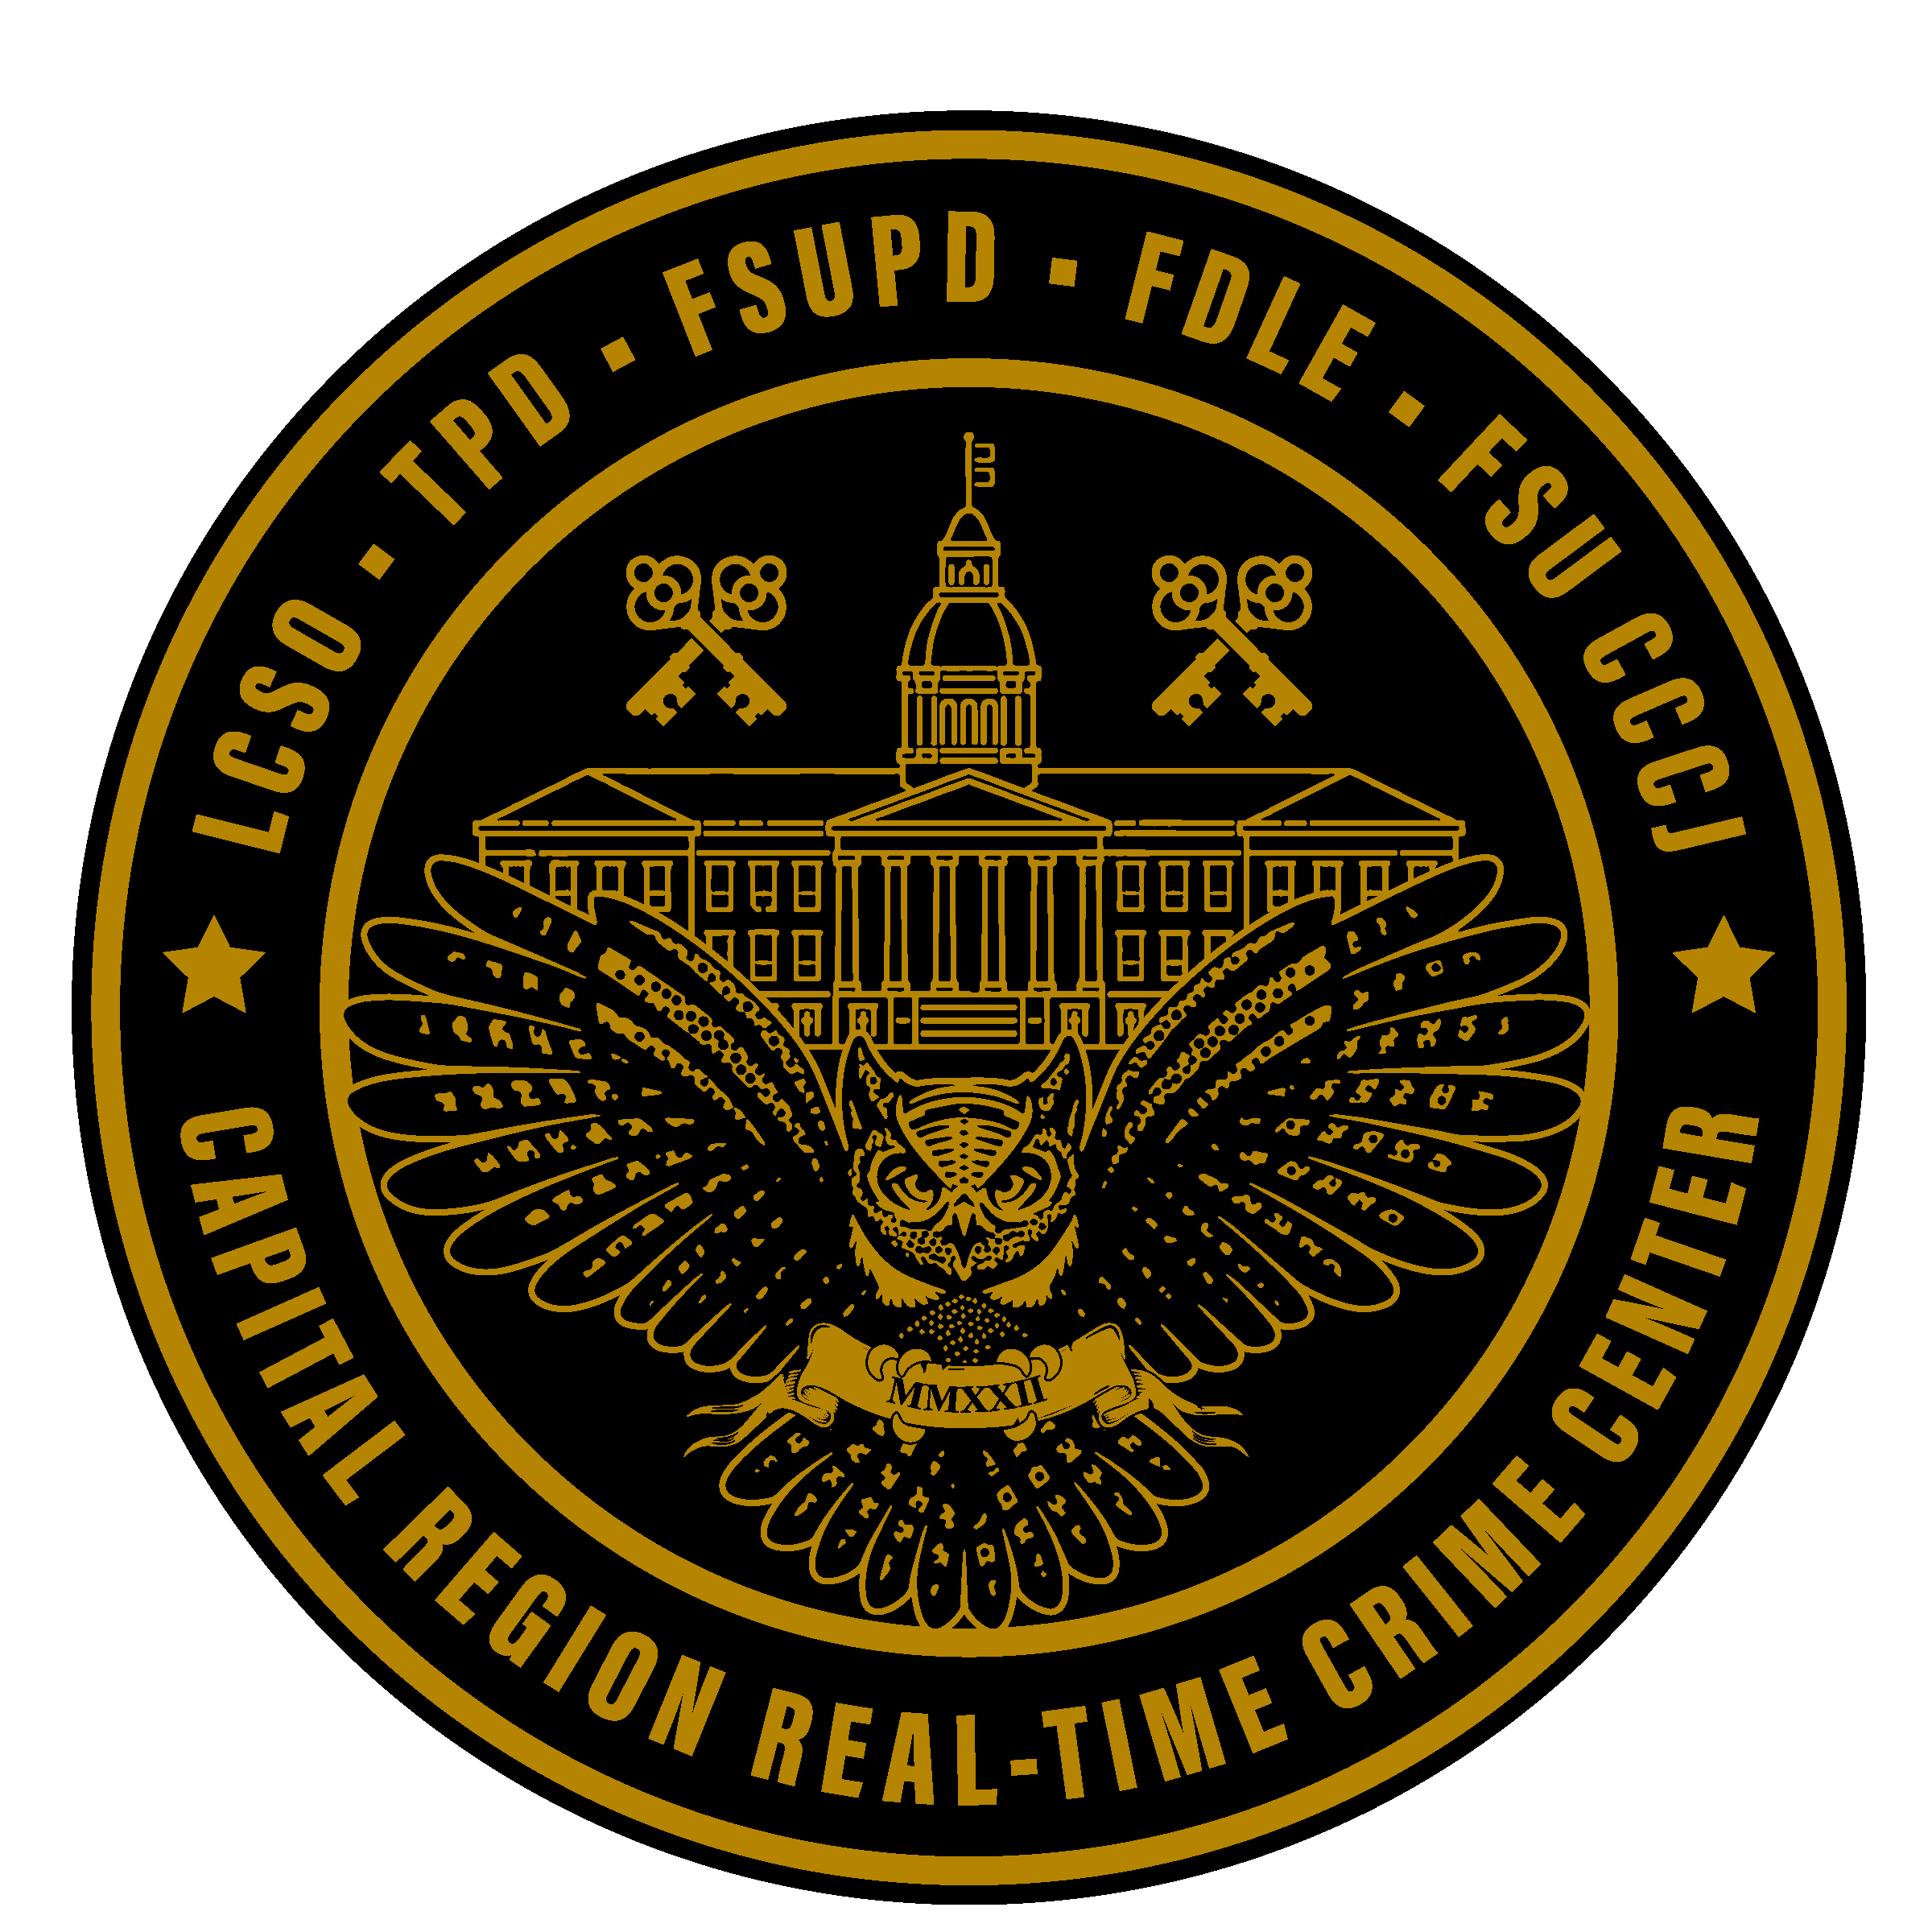 Leon-Tallahassee Badge